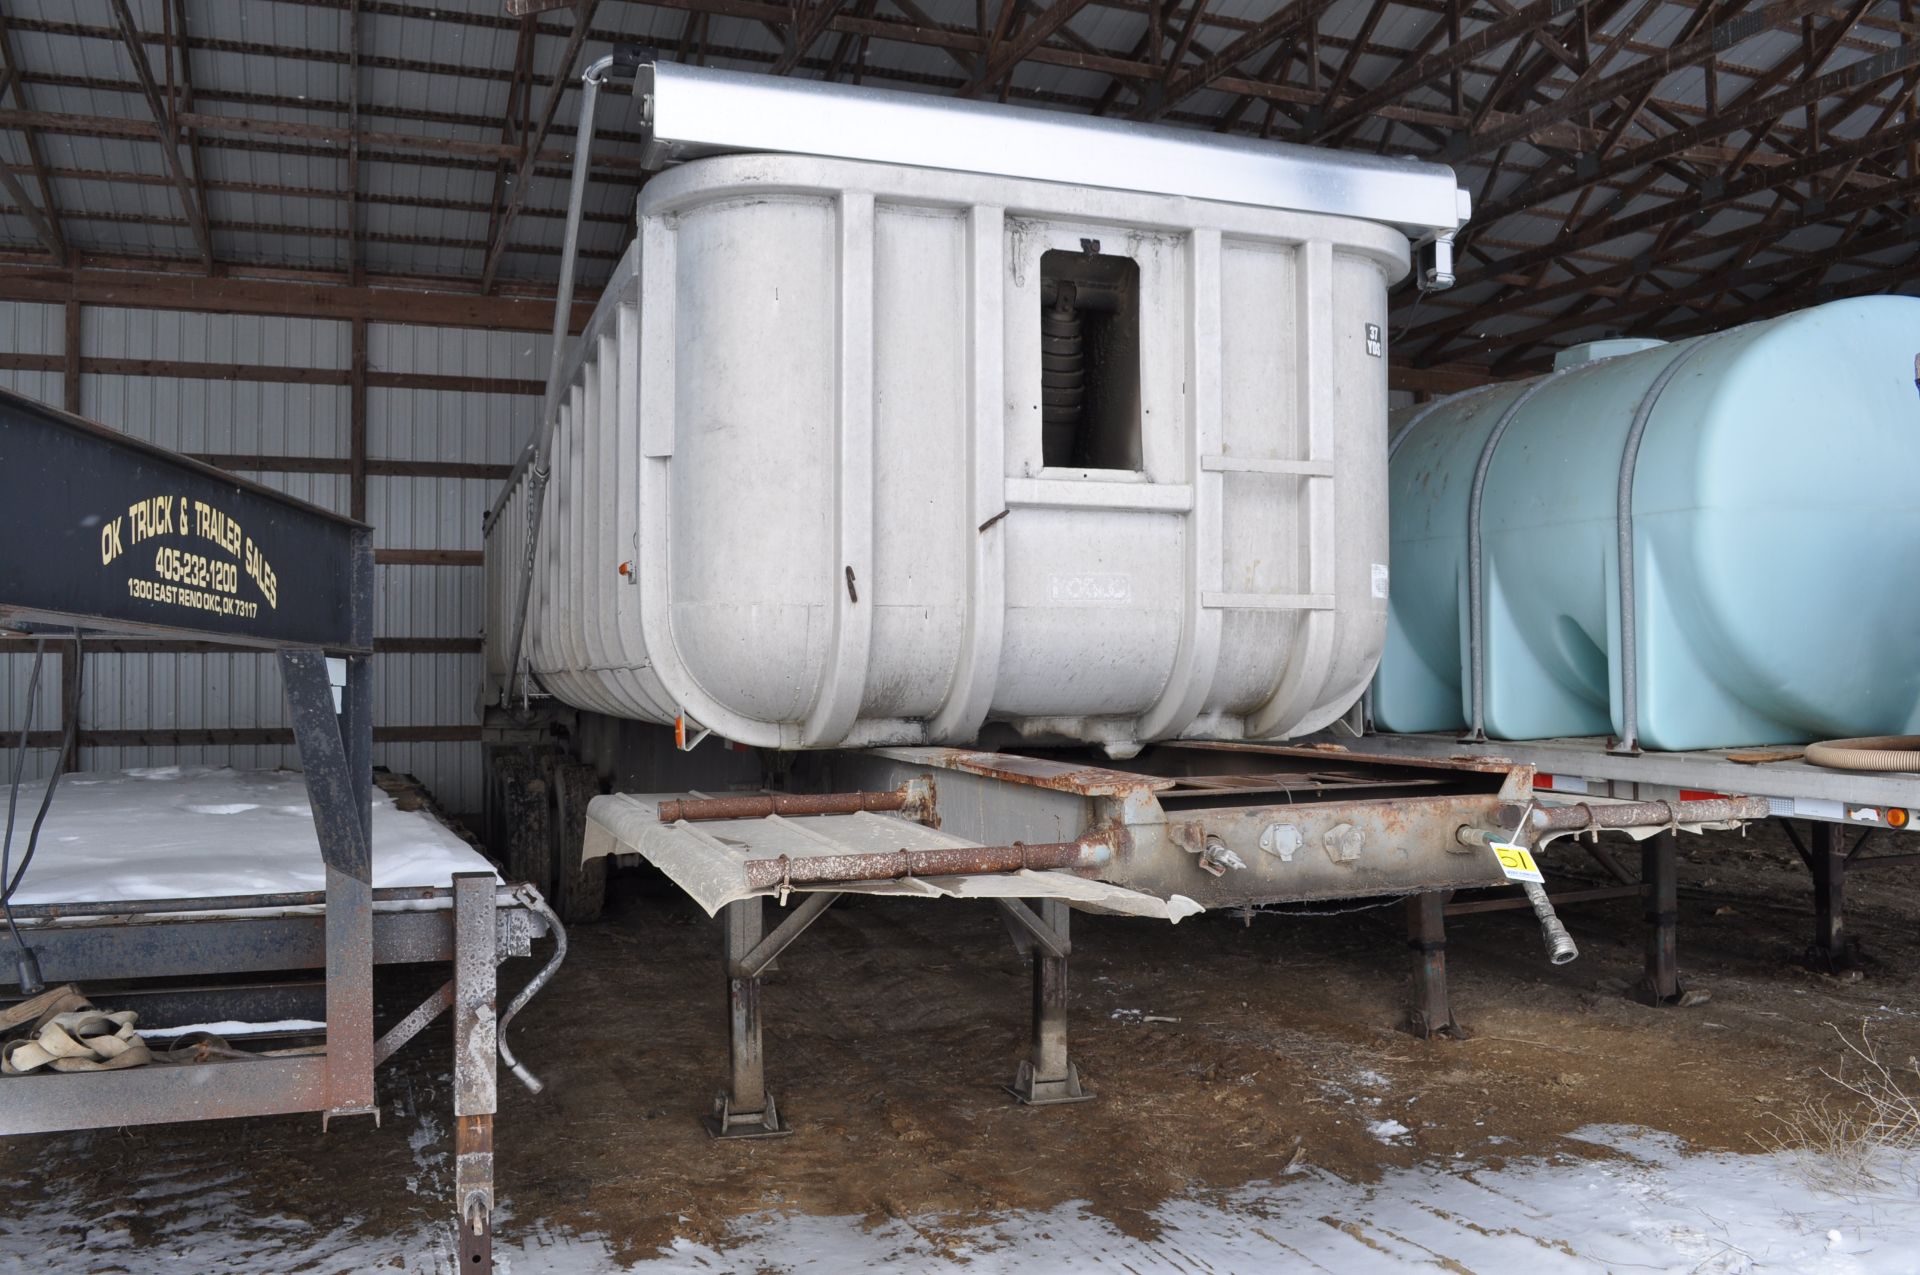 30’ Hobbs frame dump trailer, steel frame, alum dump, tri axle, 11R22.5 tires, tarp, coal chute,